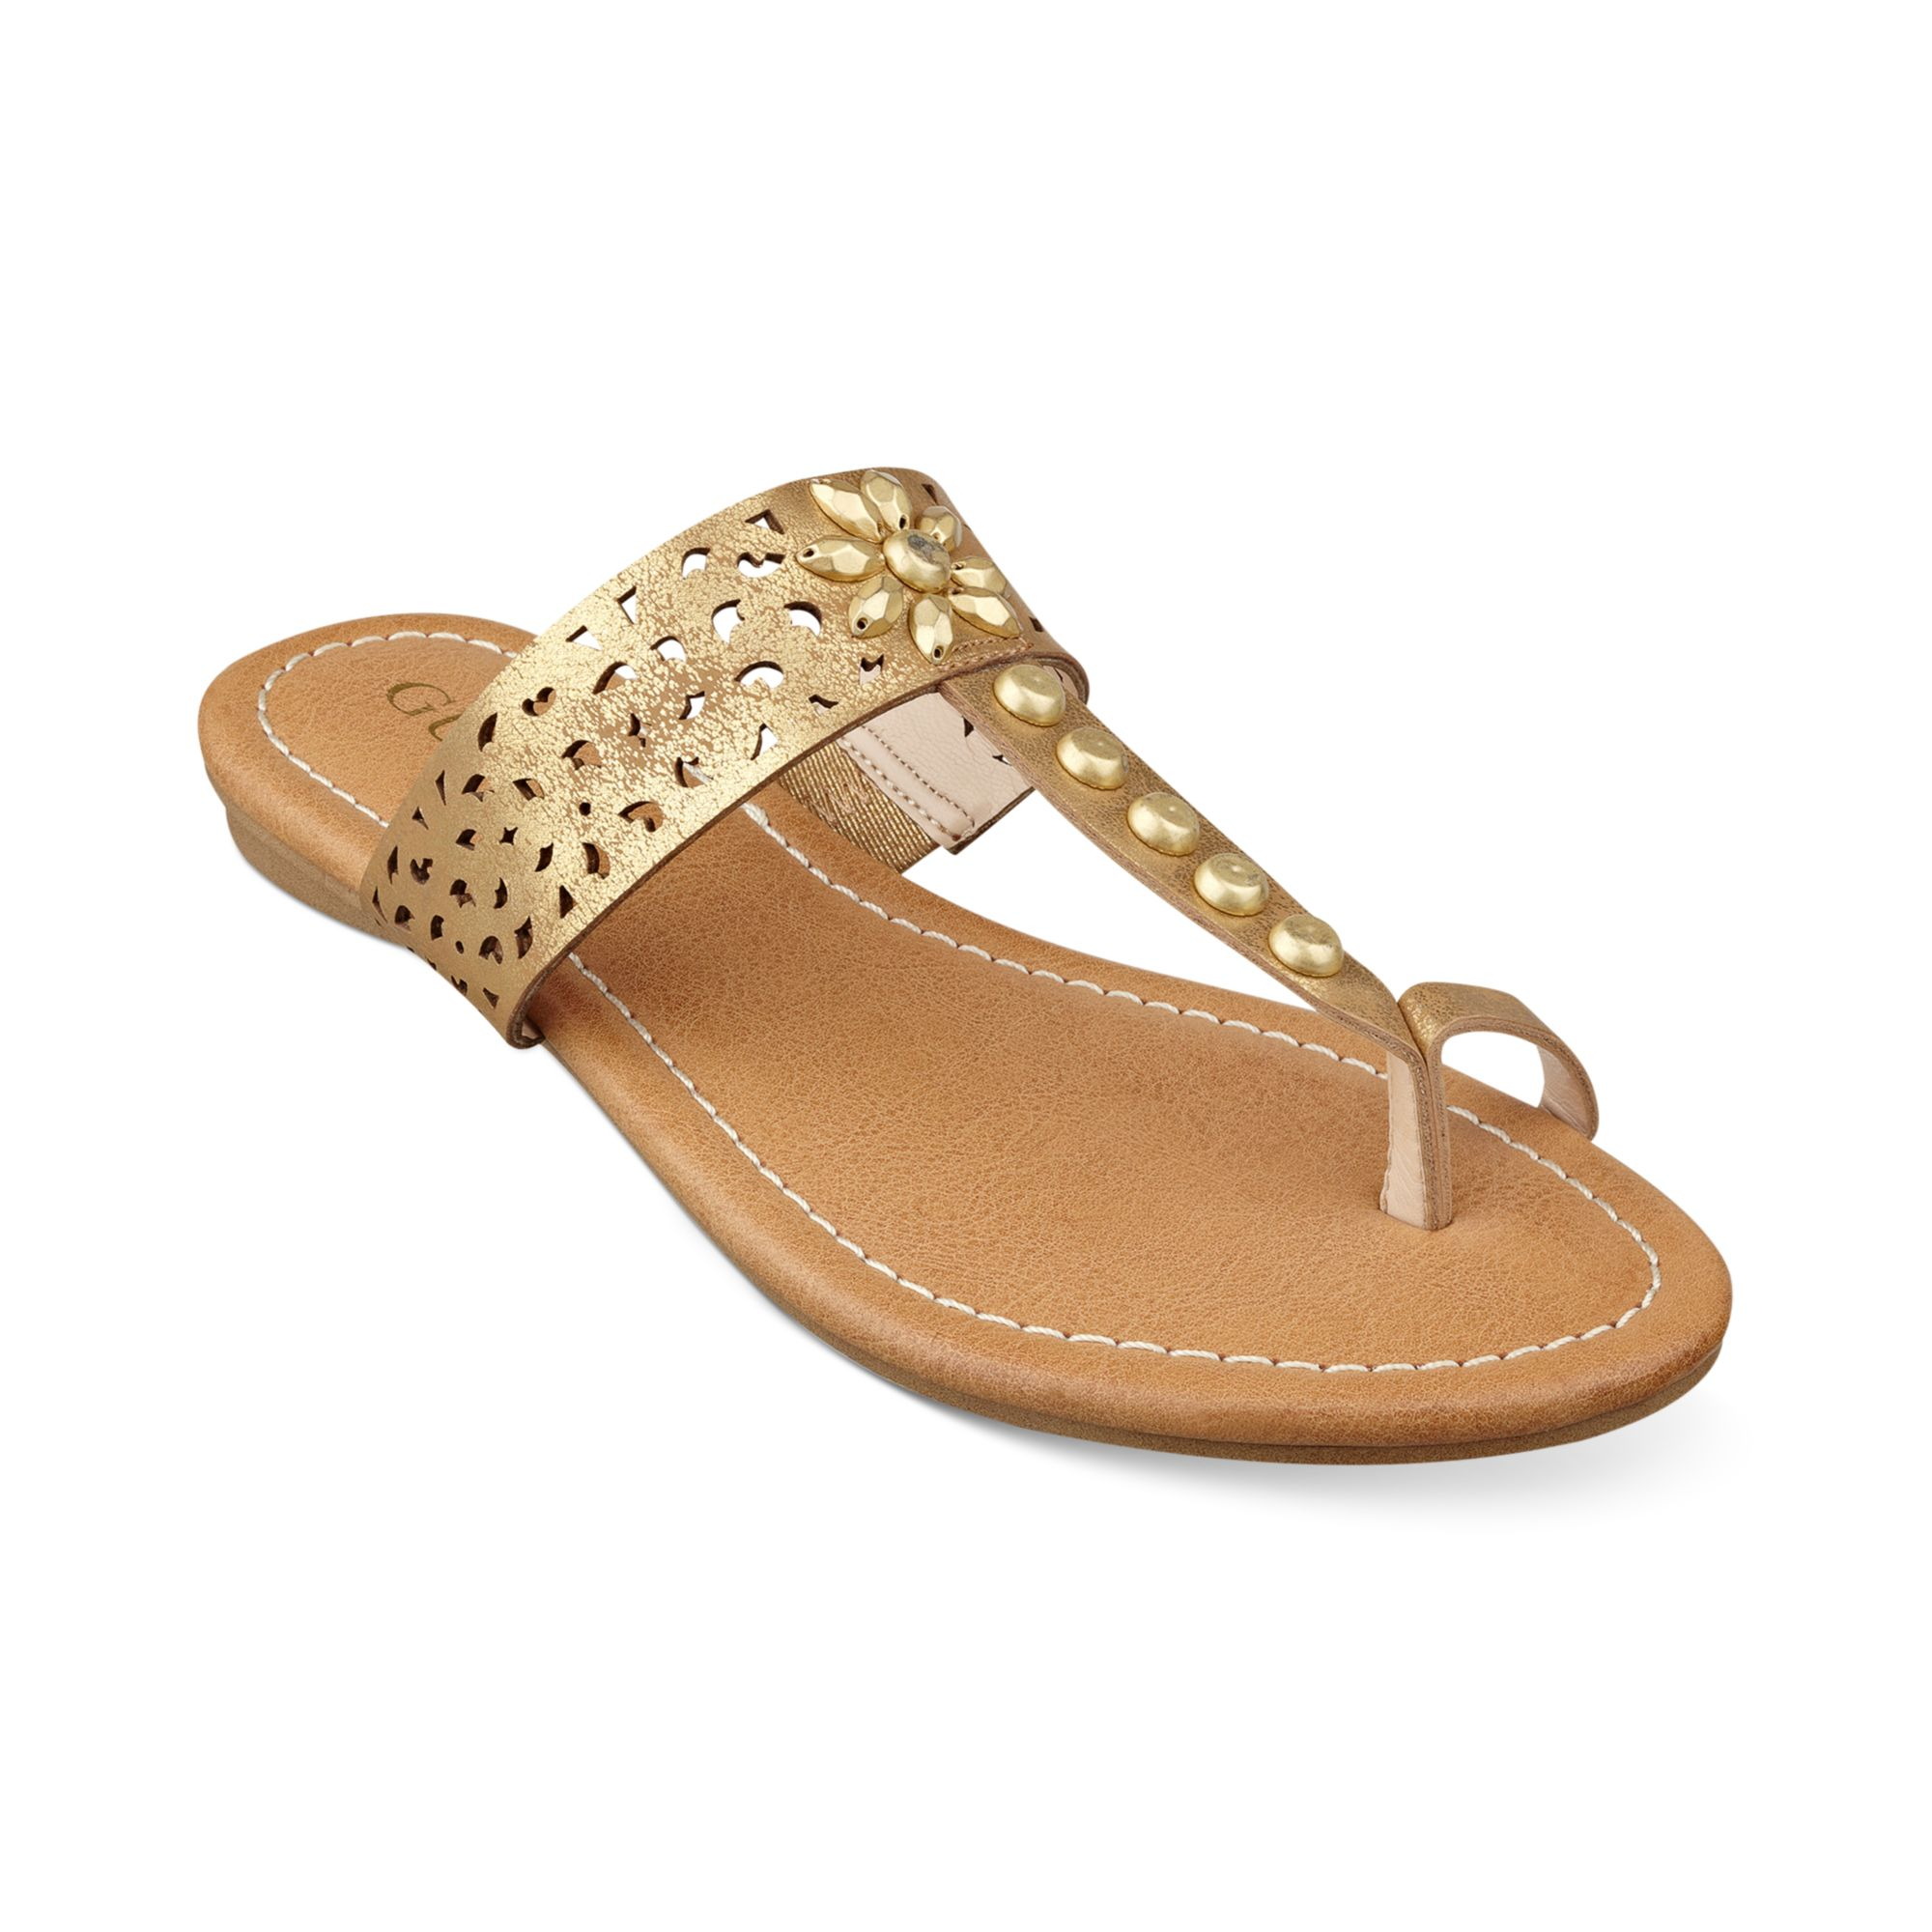 Lyst - Guess Gaiana Toe Ring Flat Sandals in Metallic